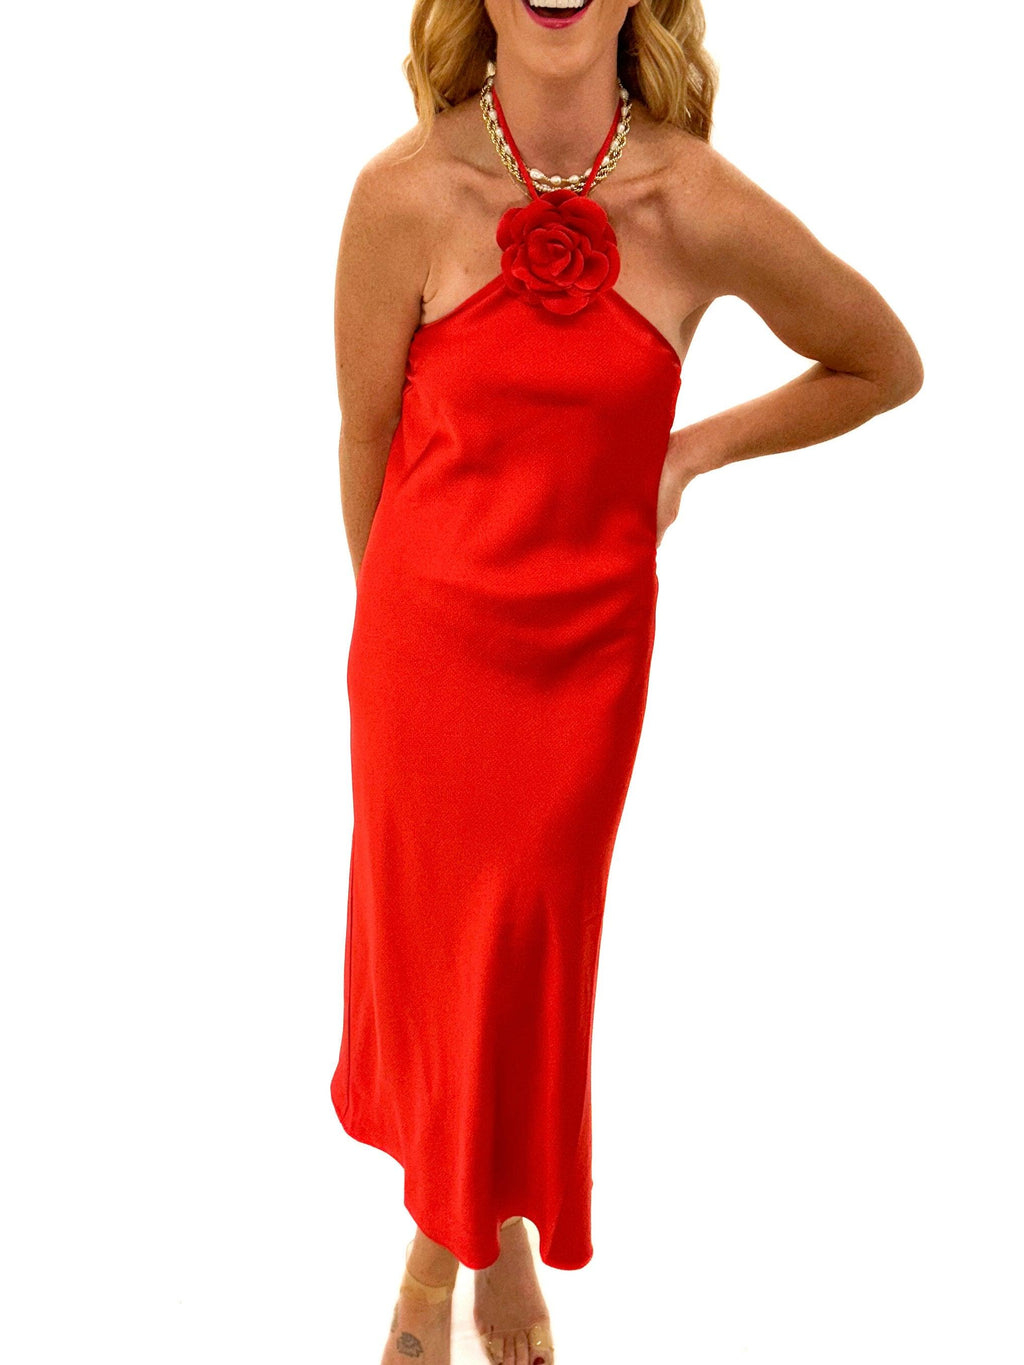 Rosies Red Satin Dress - Alden+Rose LLC 